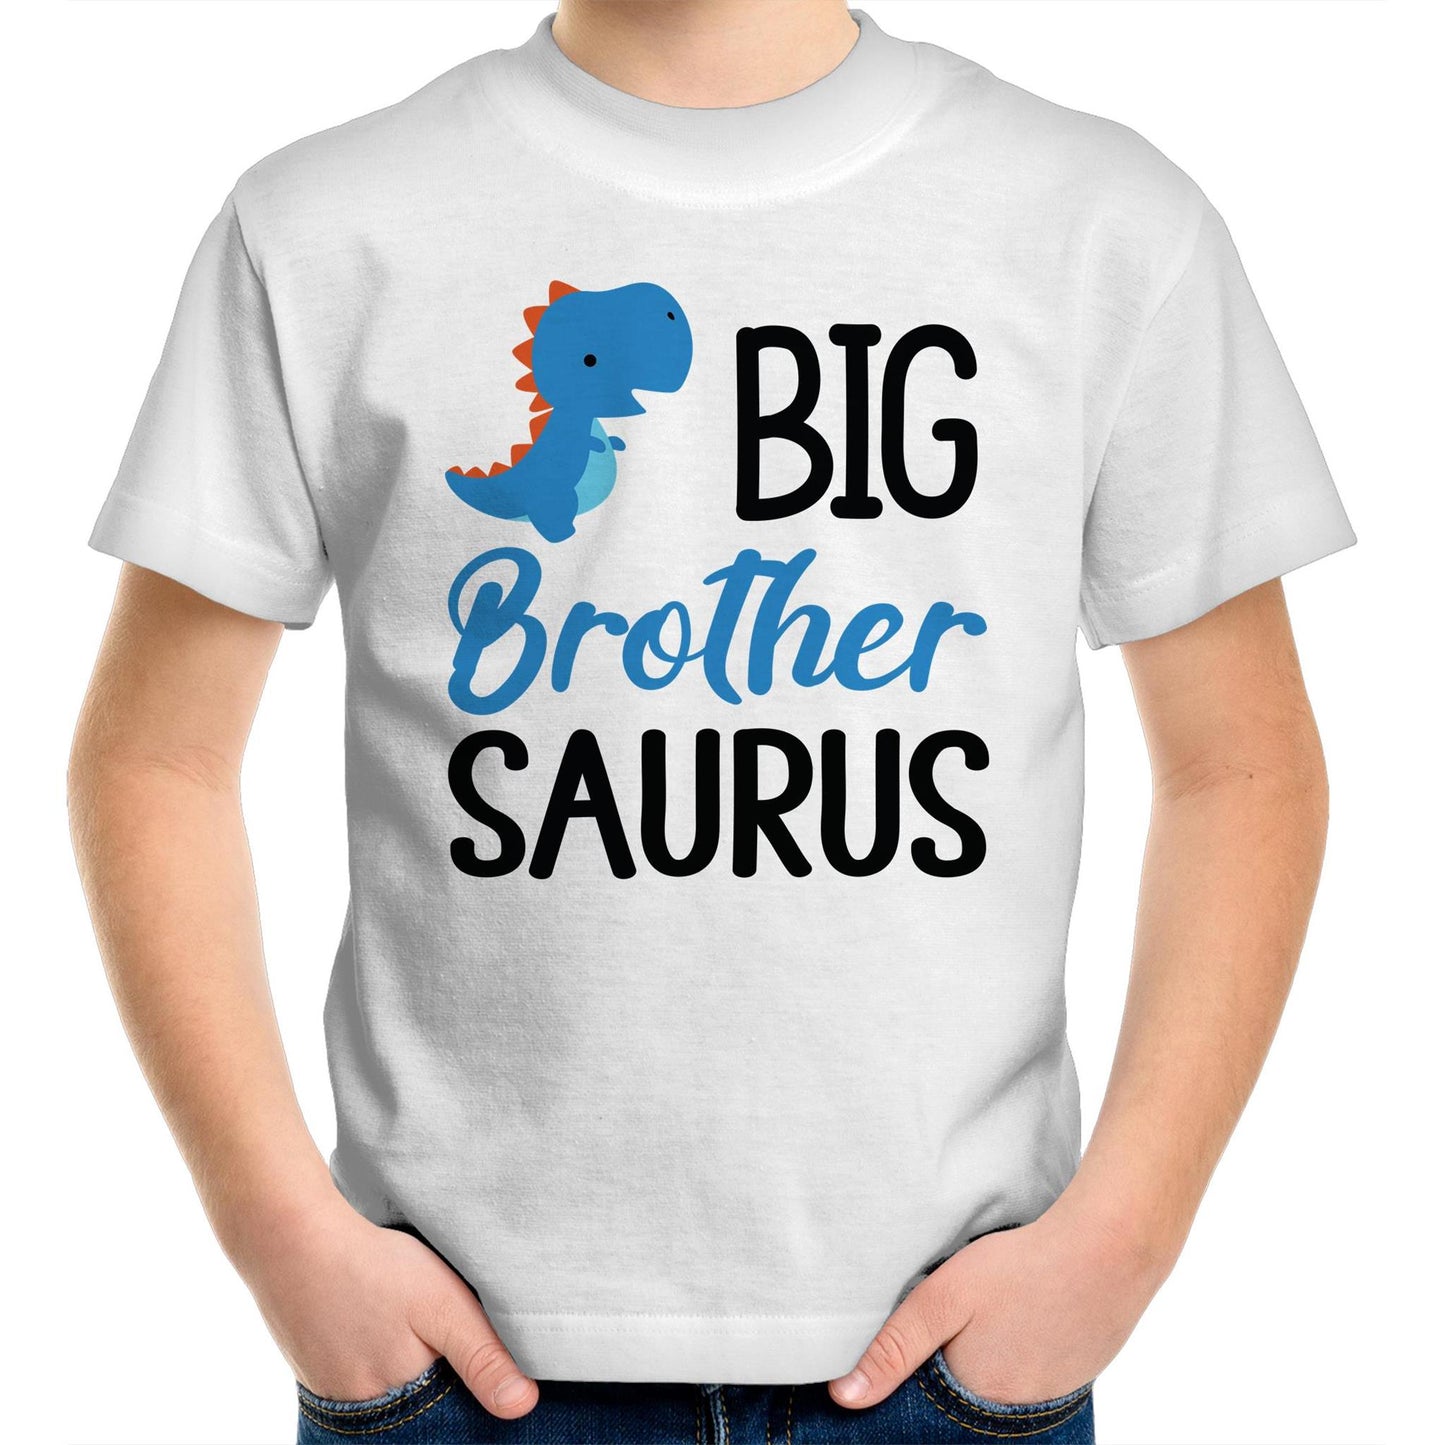 Big Brother Saurus t shirt for kids